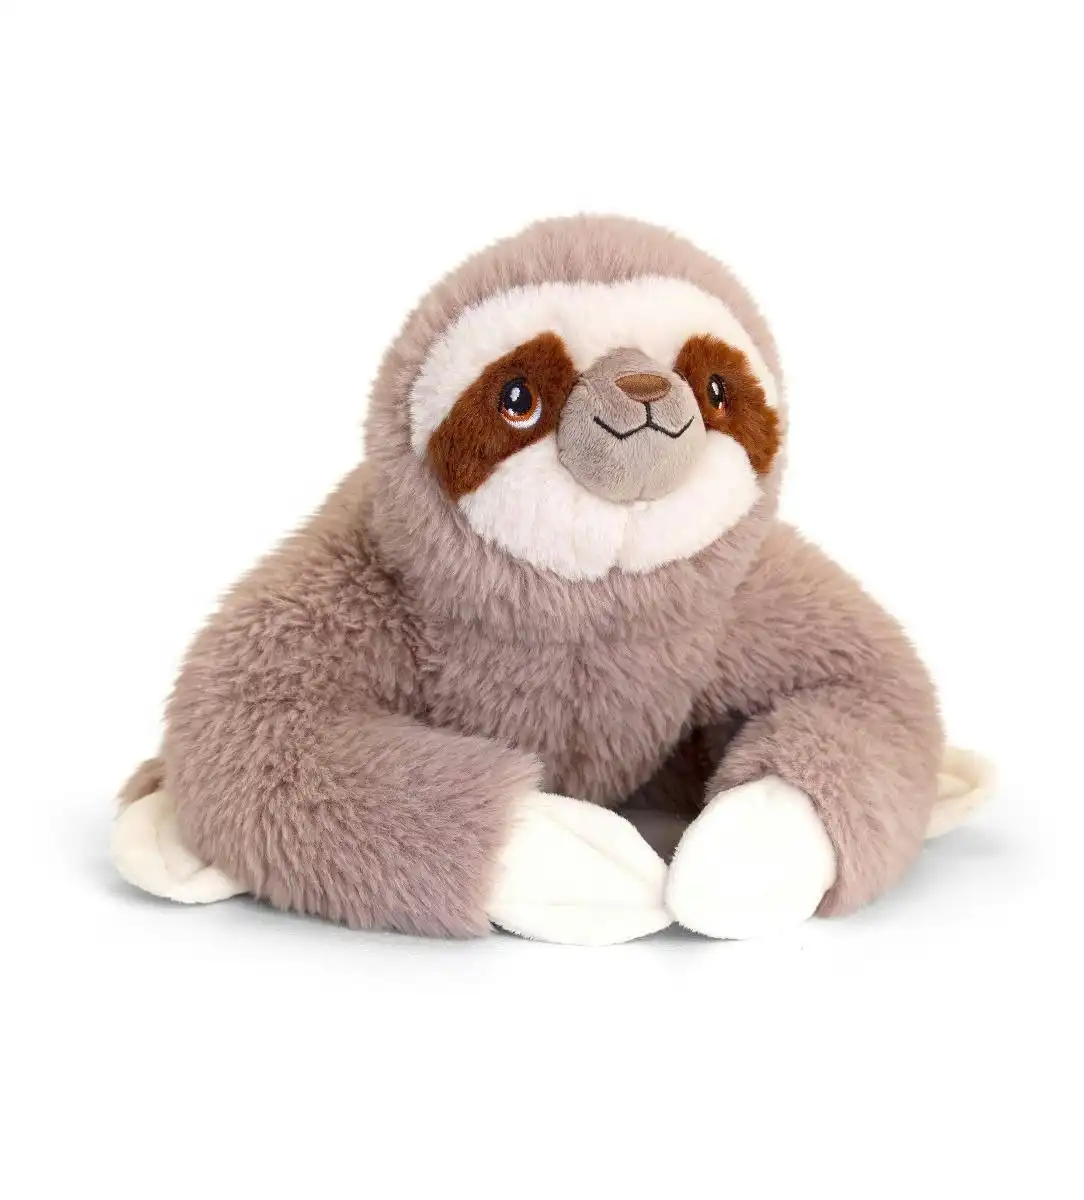 Keeleco 25cm Sloth Kids/Children Animal Soft Plush Stuffed Toy Brown 3y+